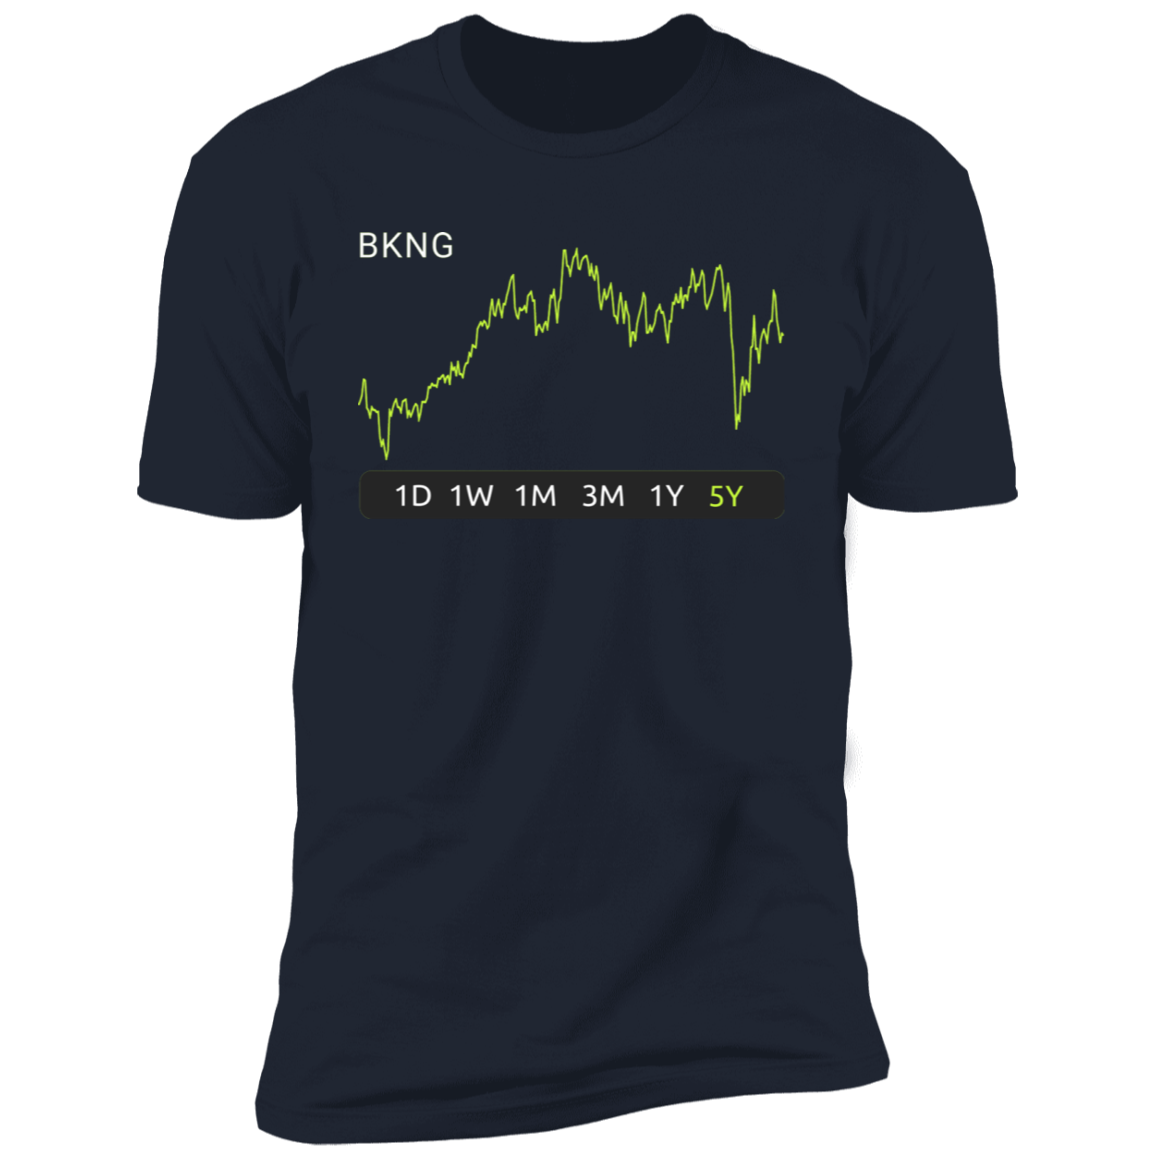 BKNG Stock  5y Premium T-Shirt